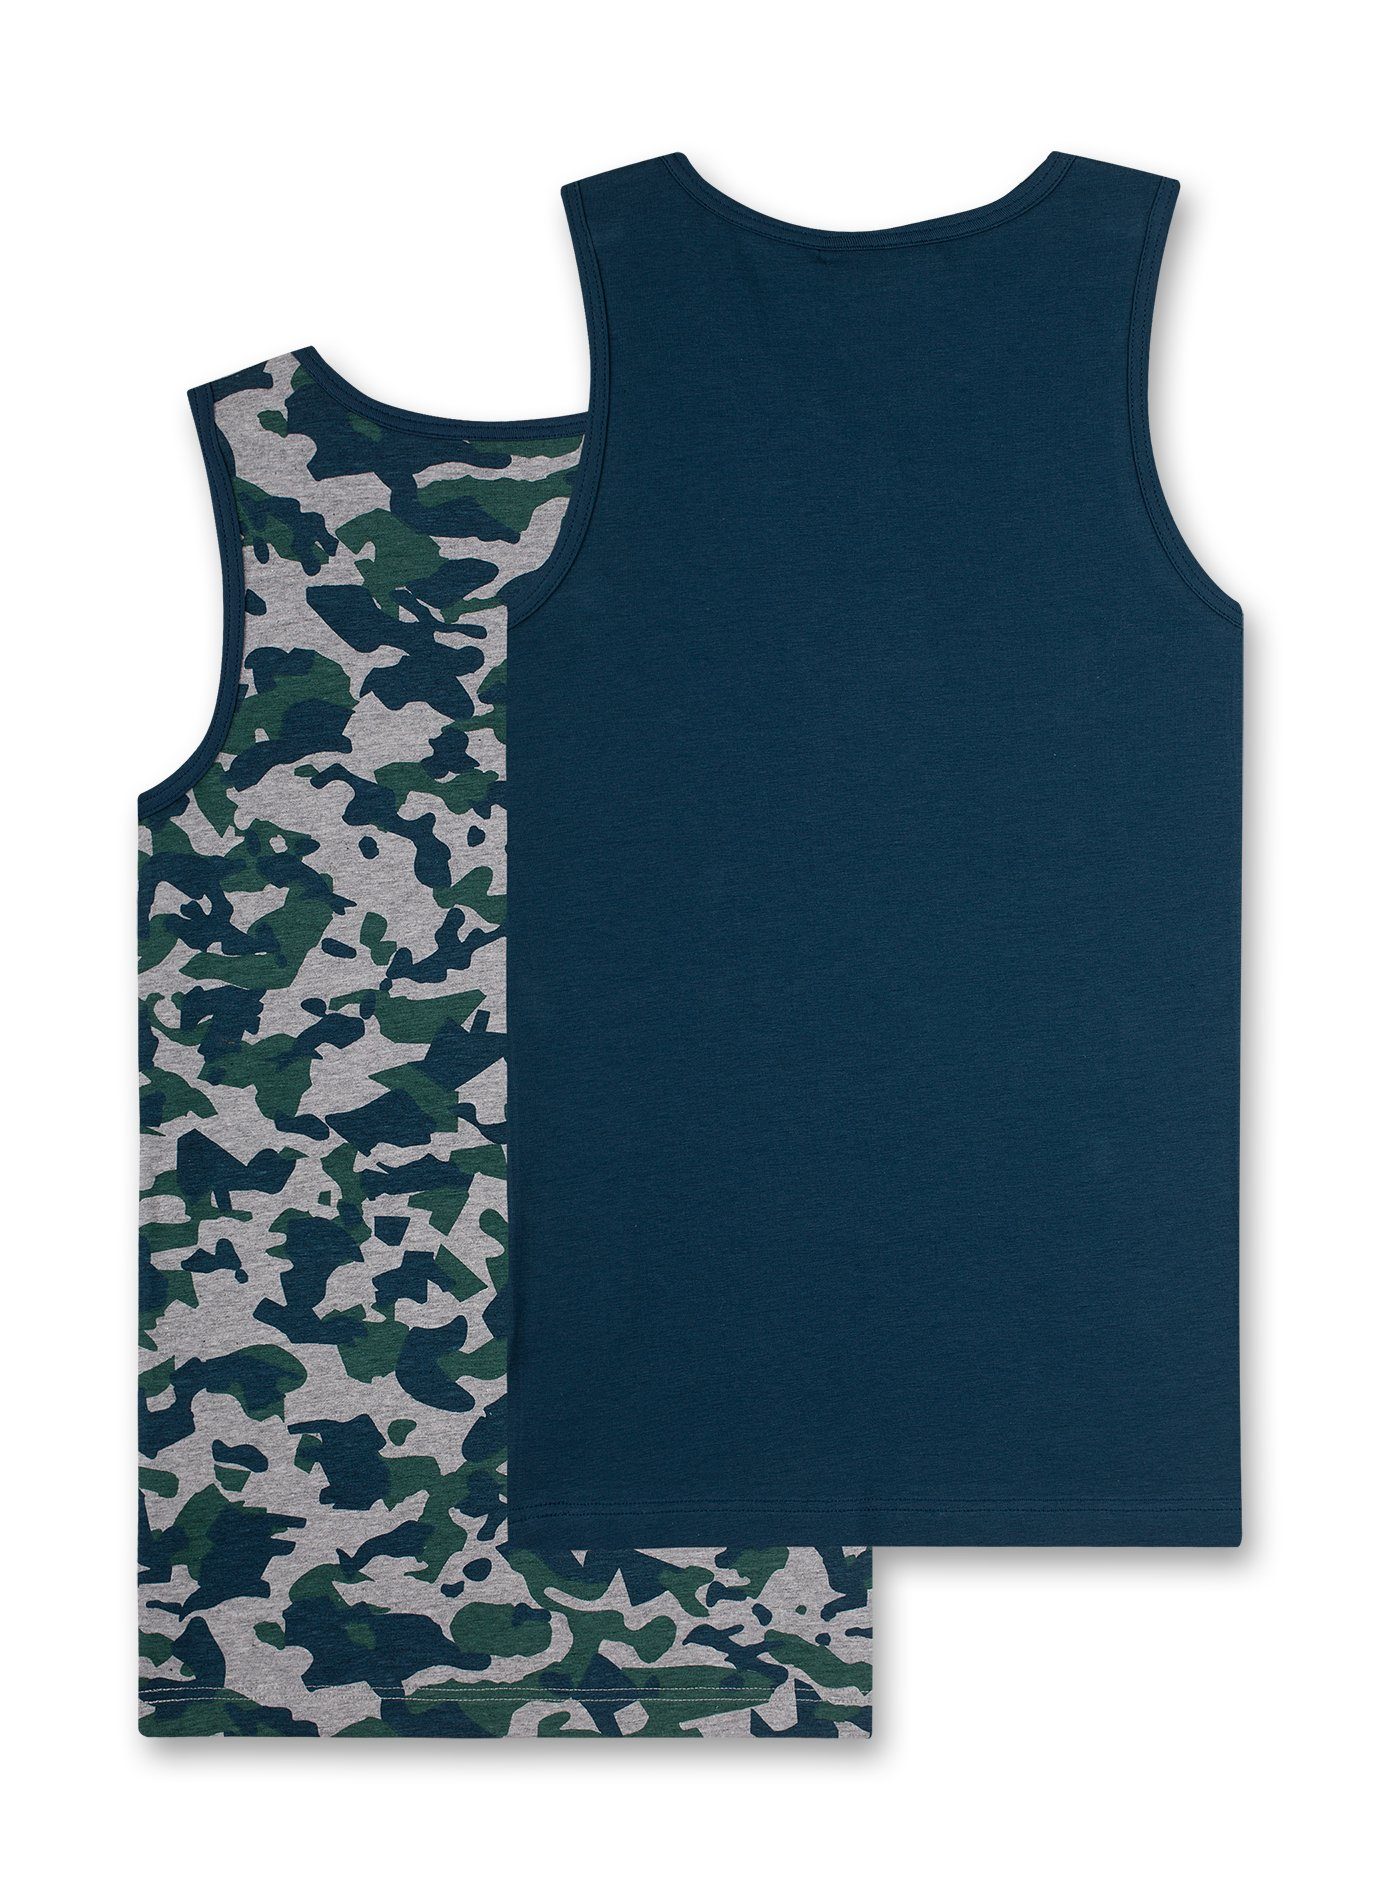 (Doppelpack, Jungen s.Oliver Unterhemd blau 2-St) Pack camouflage Hemd Unterhemd Junior grün 2er s.Oliver